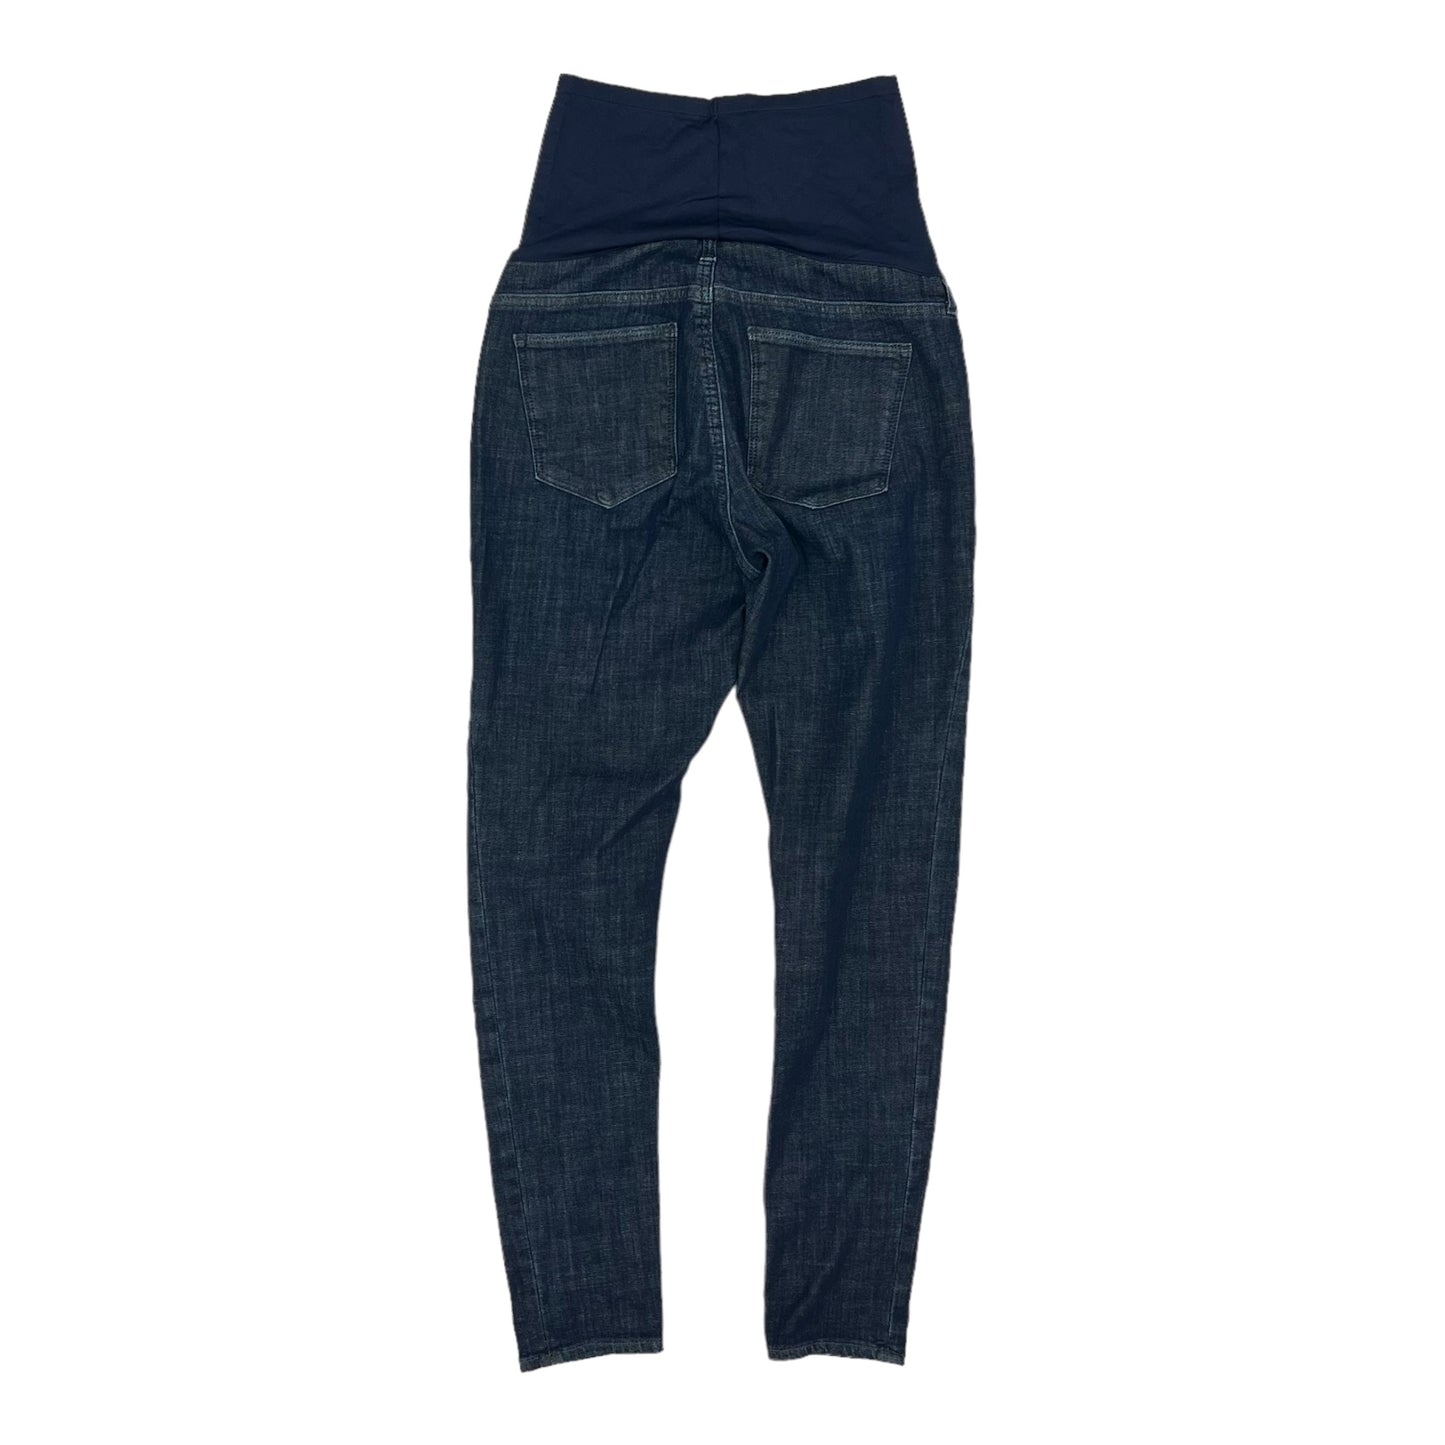 Blue Denim Maternity Jeans Gap, Size 8